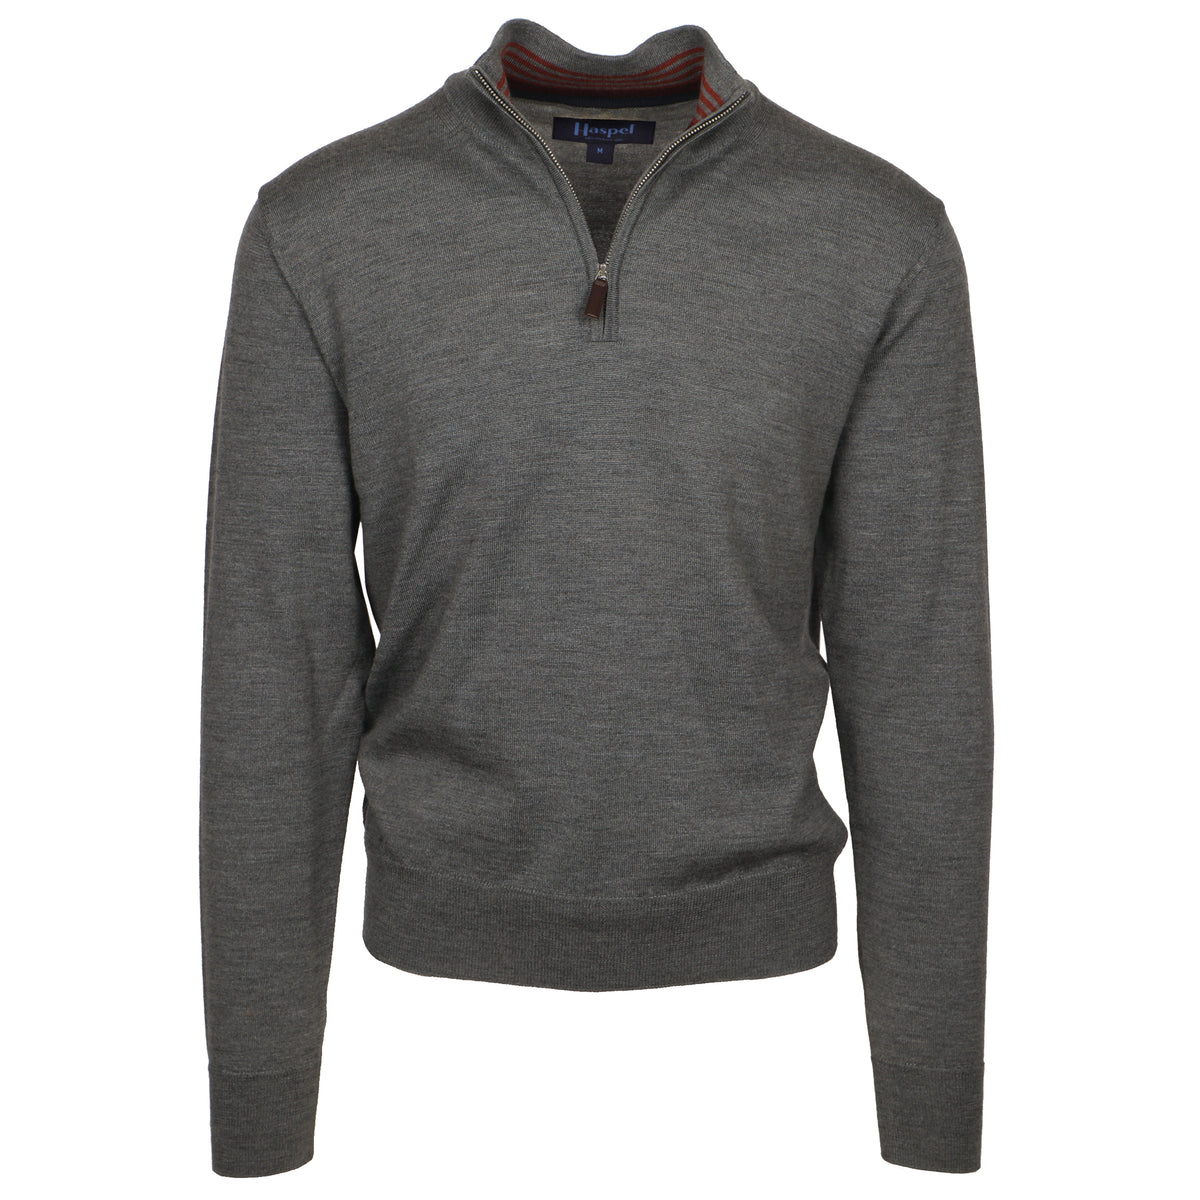 Lafayette Grey Quarter Zip Sweater